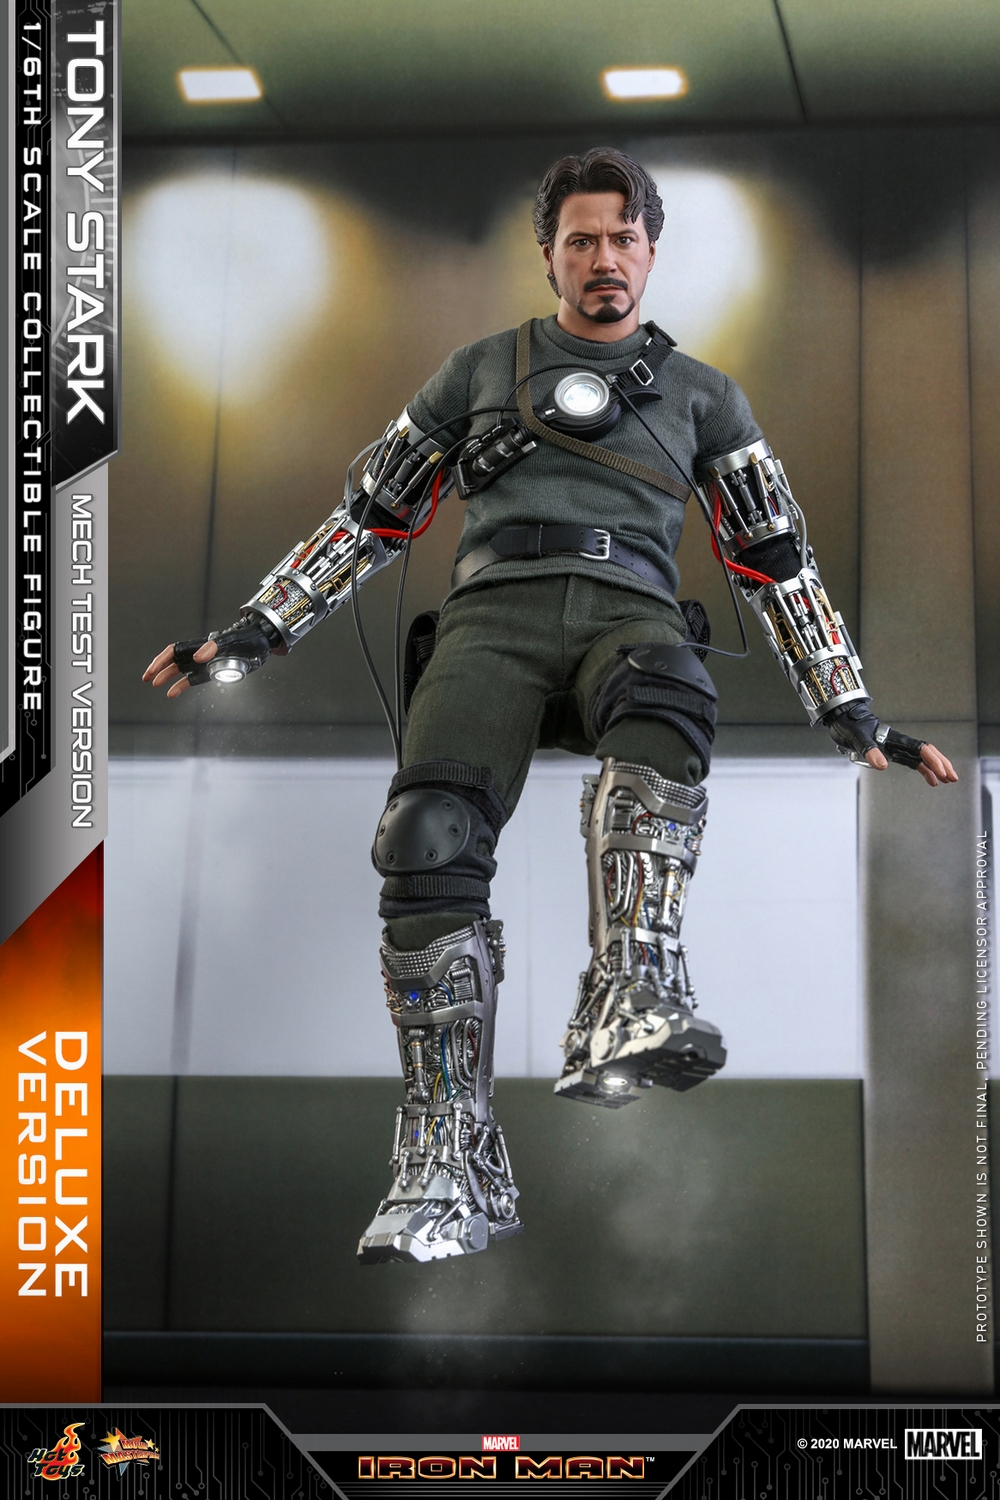 Hot Toys - IM - Tony Stark (Mech Test Version) collectible figure (Deluxe)_PR2.jpg